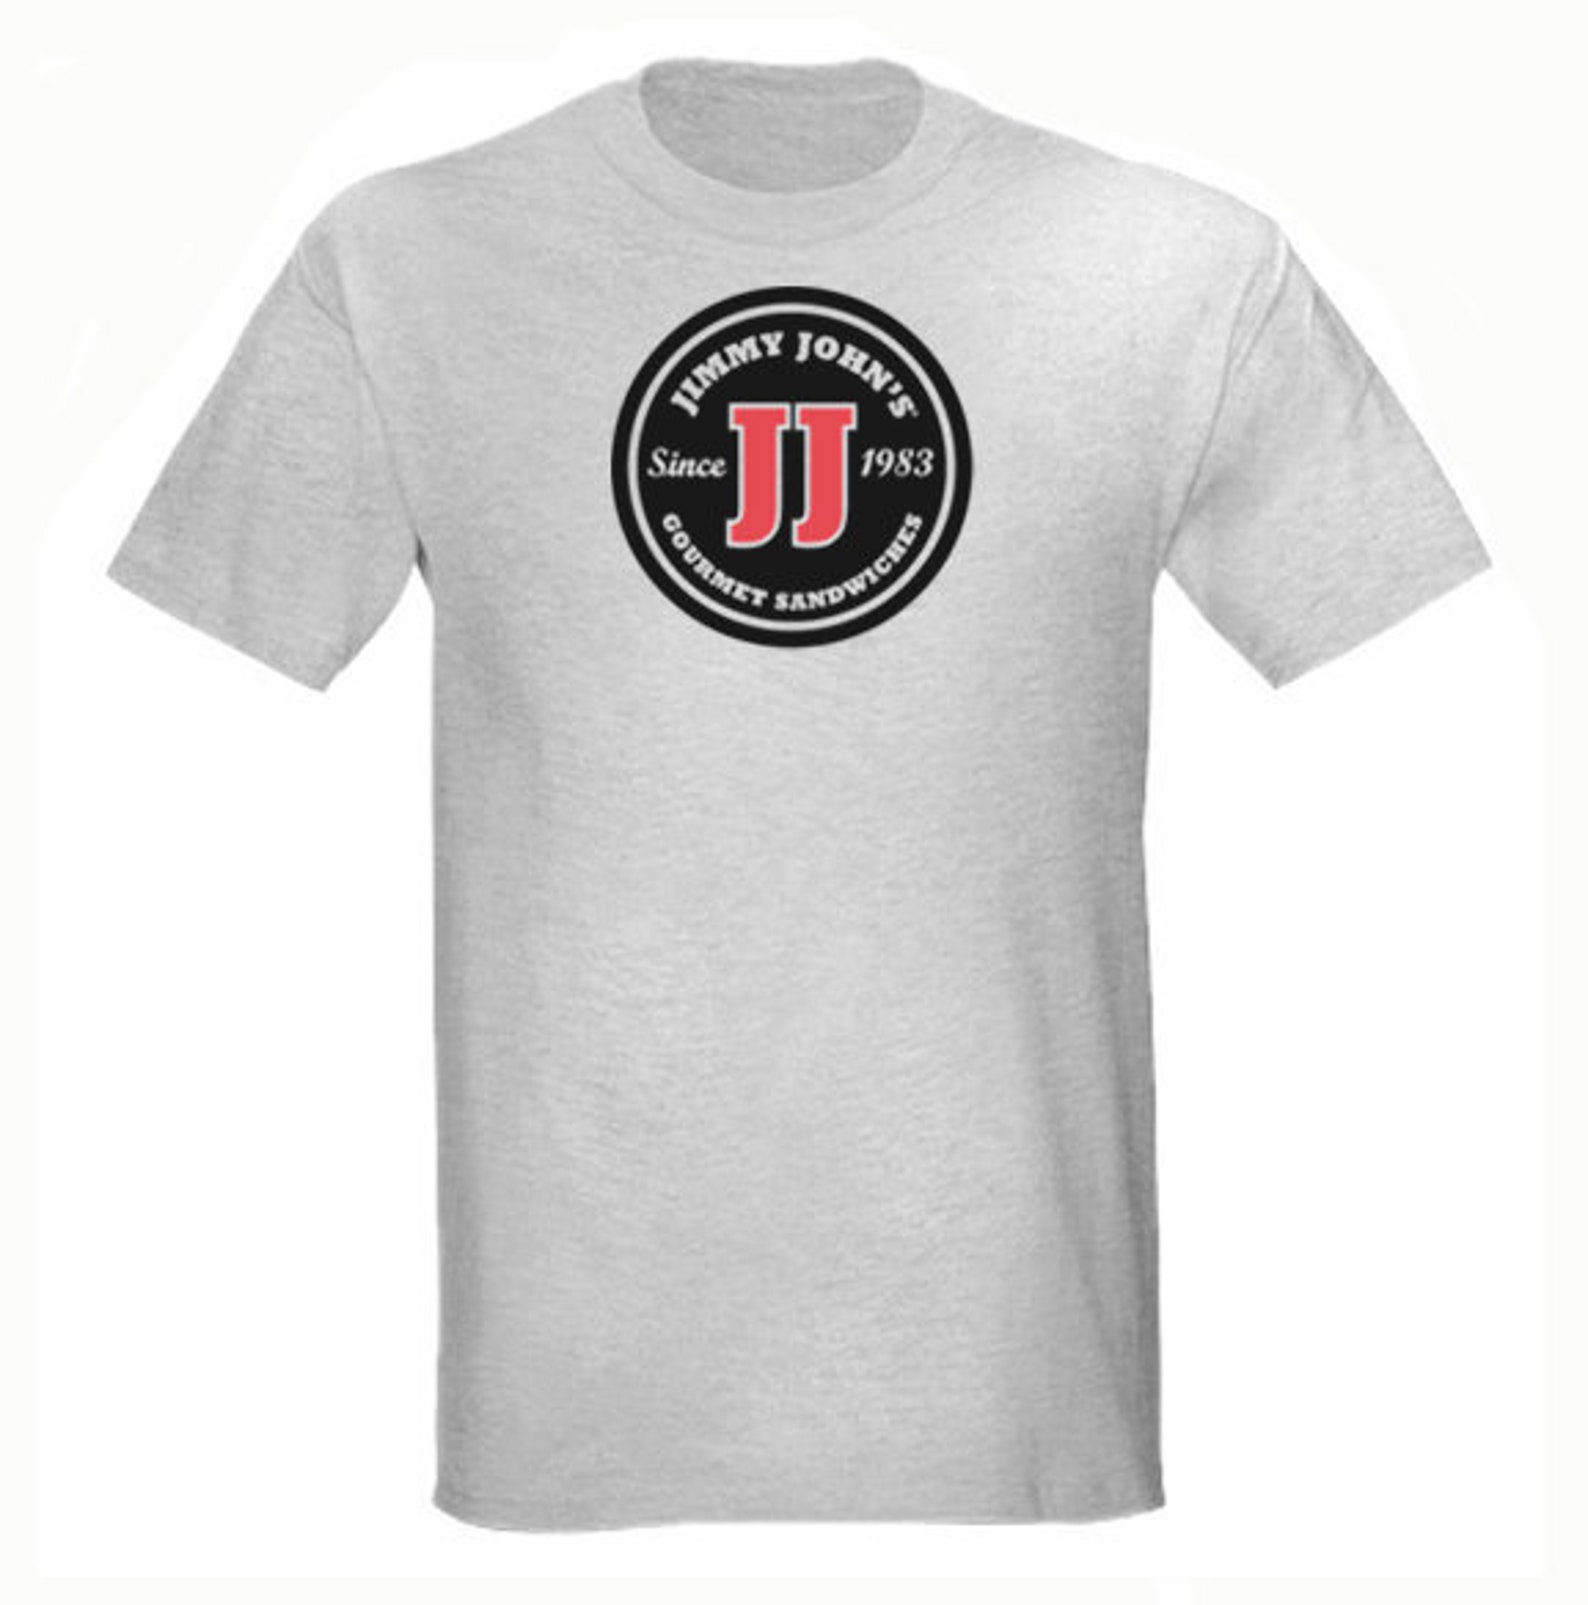 JIMMY JOHNS Gourmet Sandwiches T-shirt | Etsy